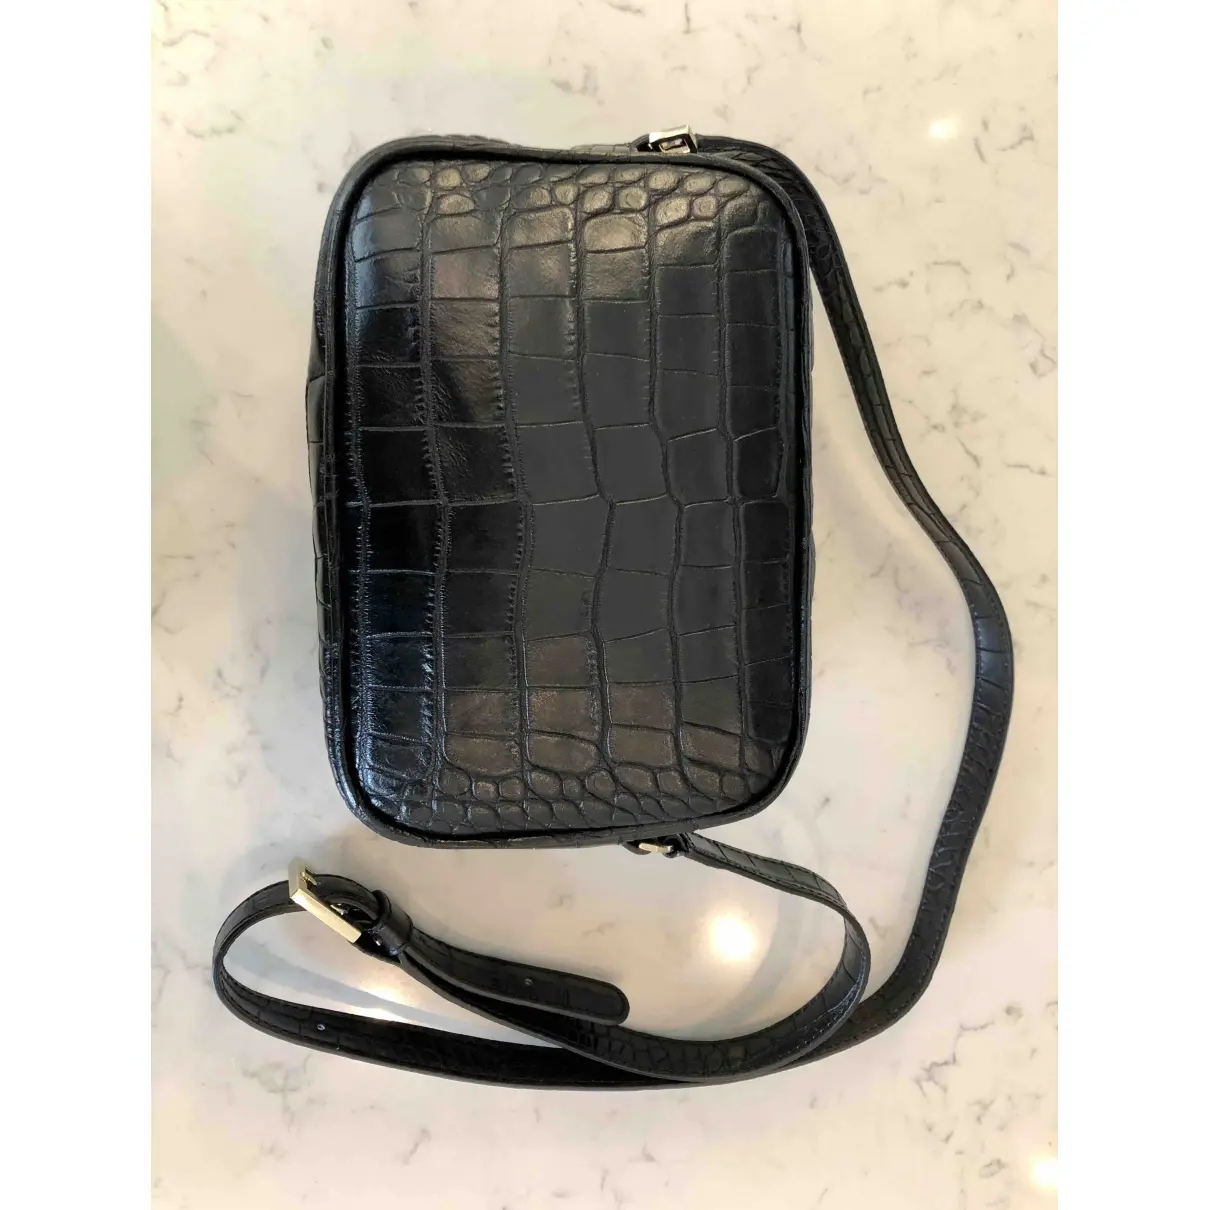 DeMellier Leather handbag for sale